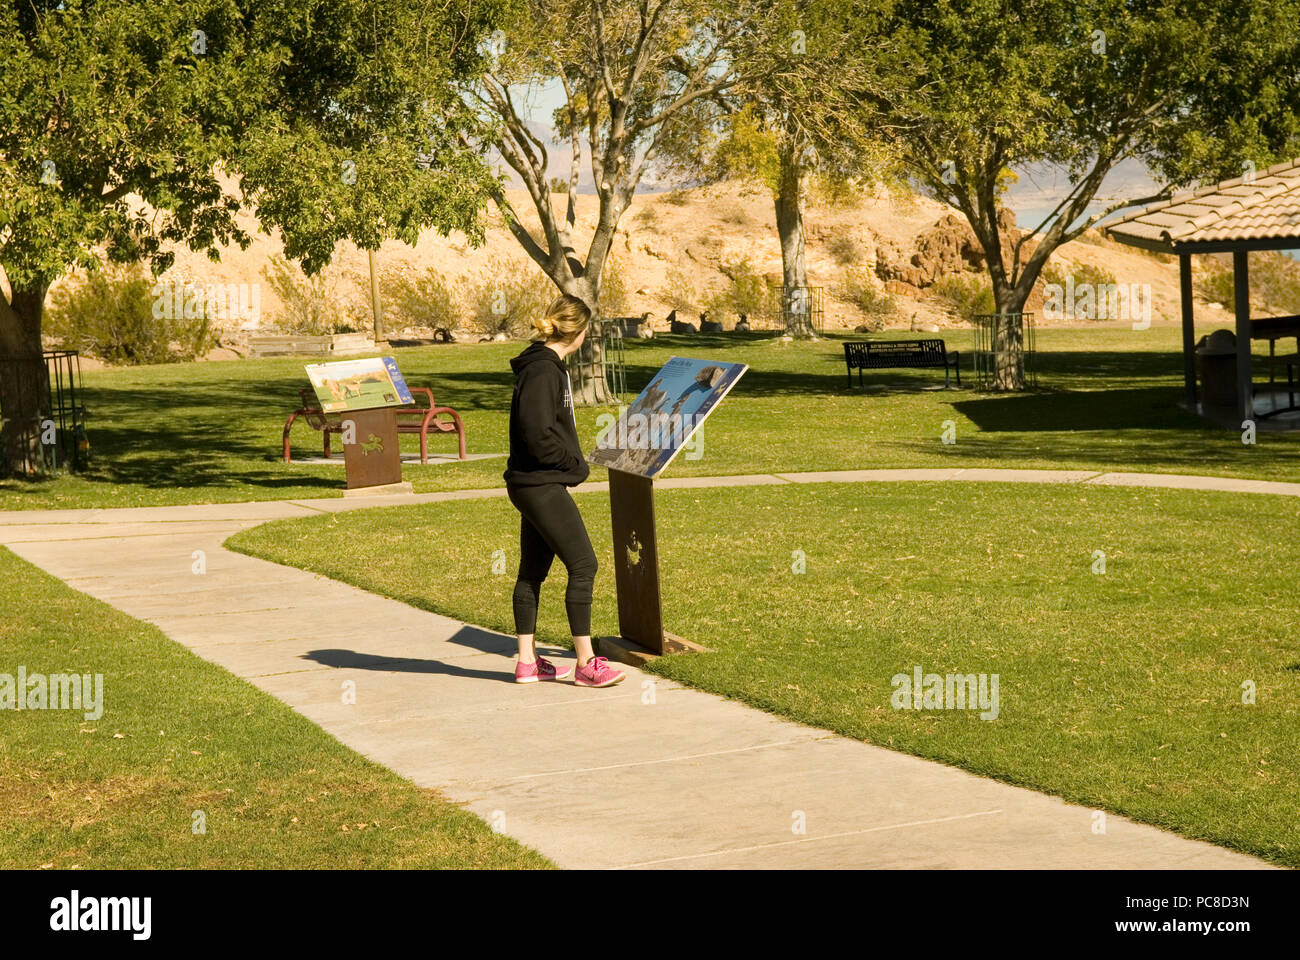 Woman reads information sign at Hemenway Park at Boulder City Nevada USA Stock Photo